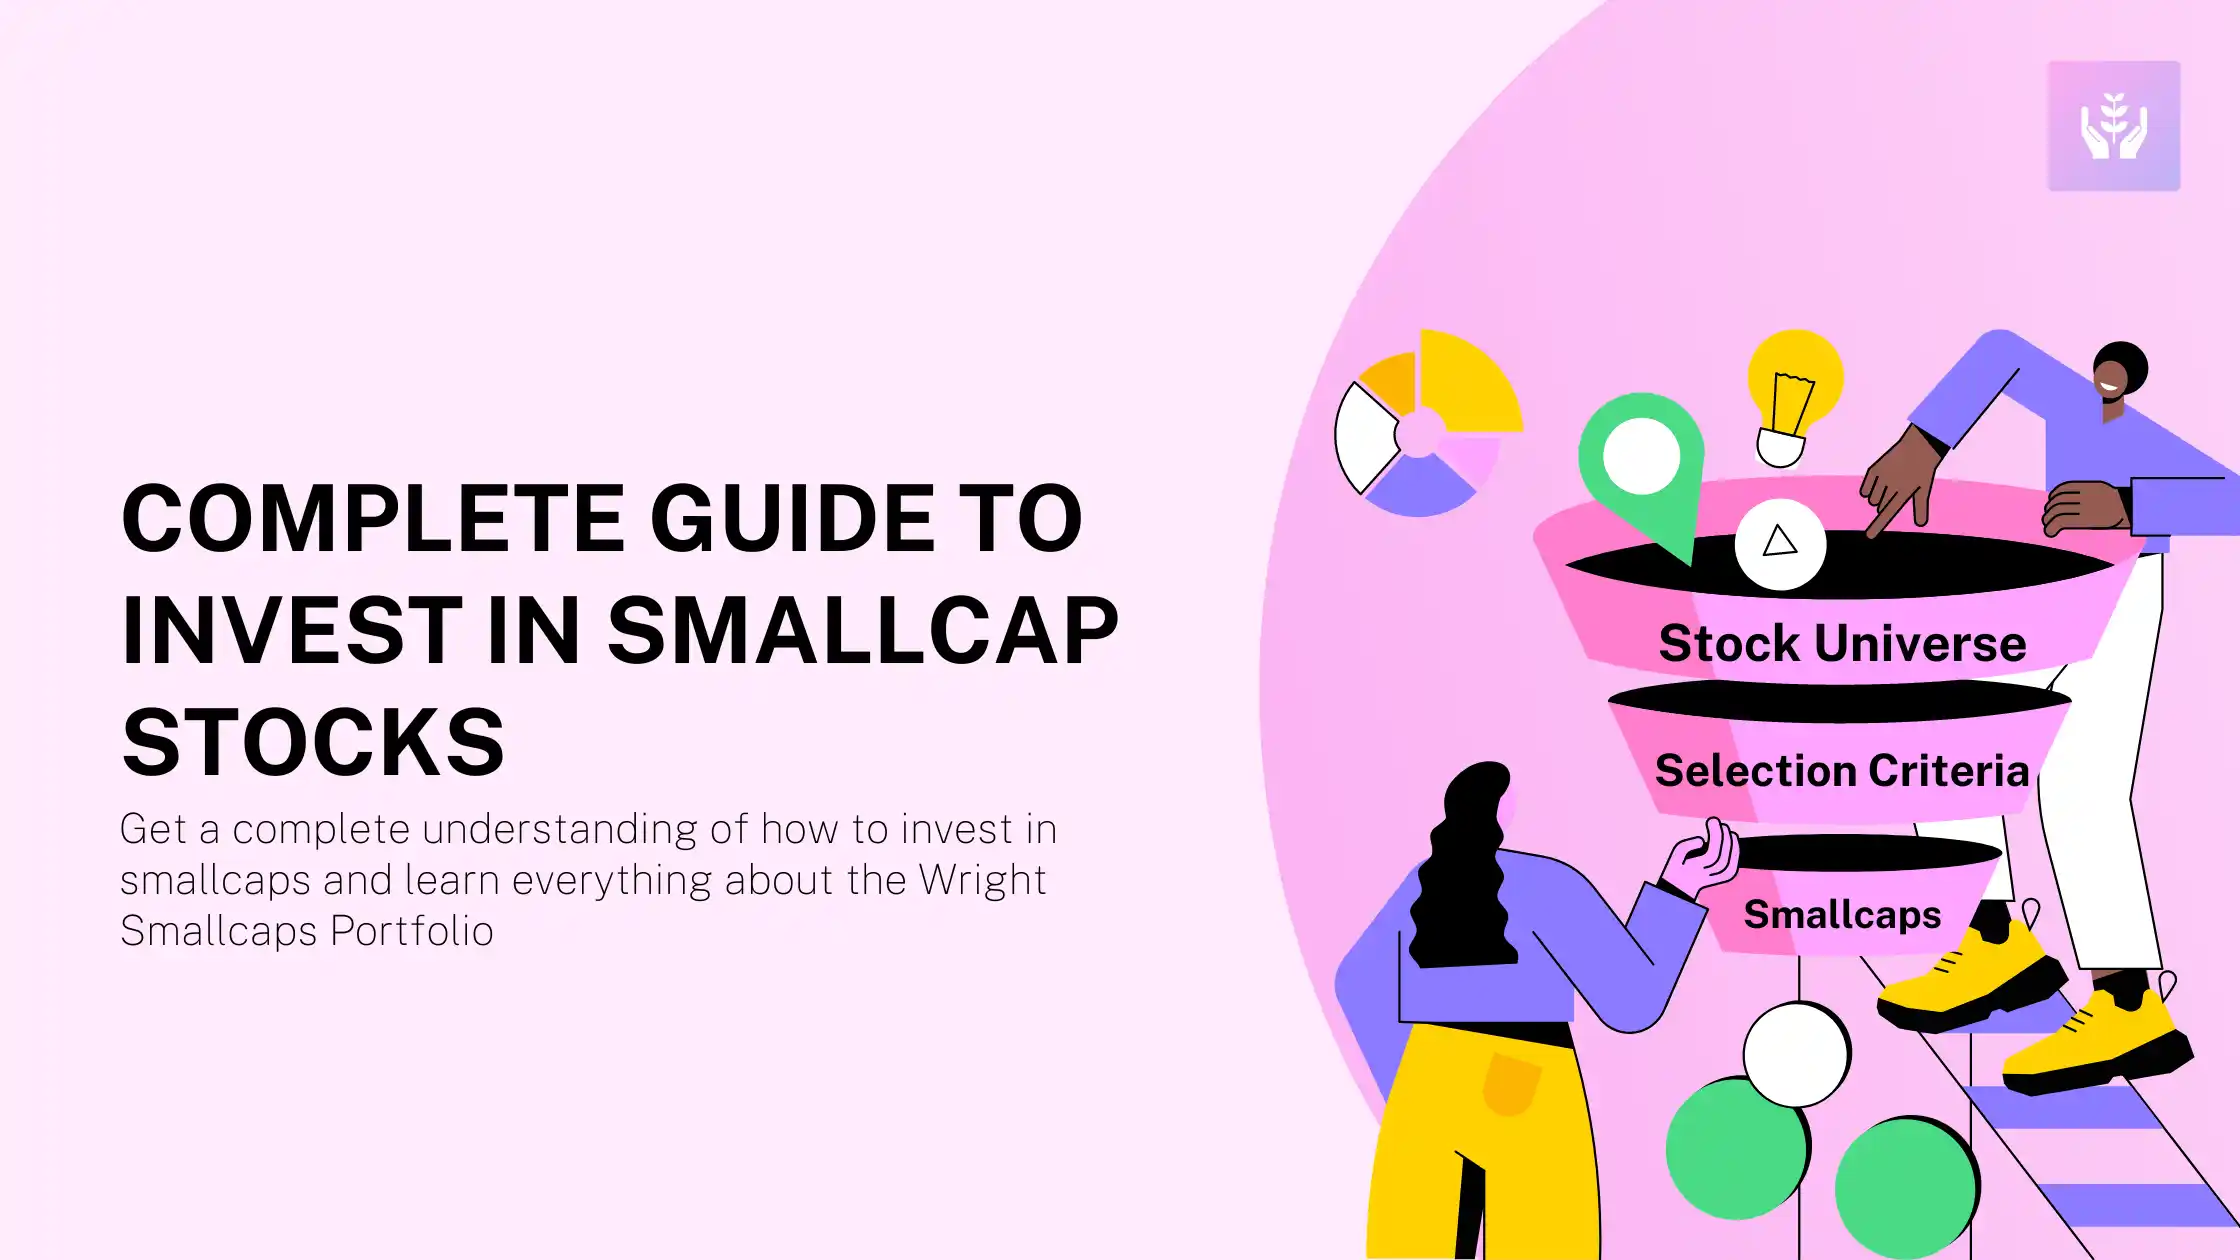 Complete guide to Invest in Smallcap Stocks & in Wright Smallcaps Portfolio